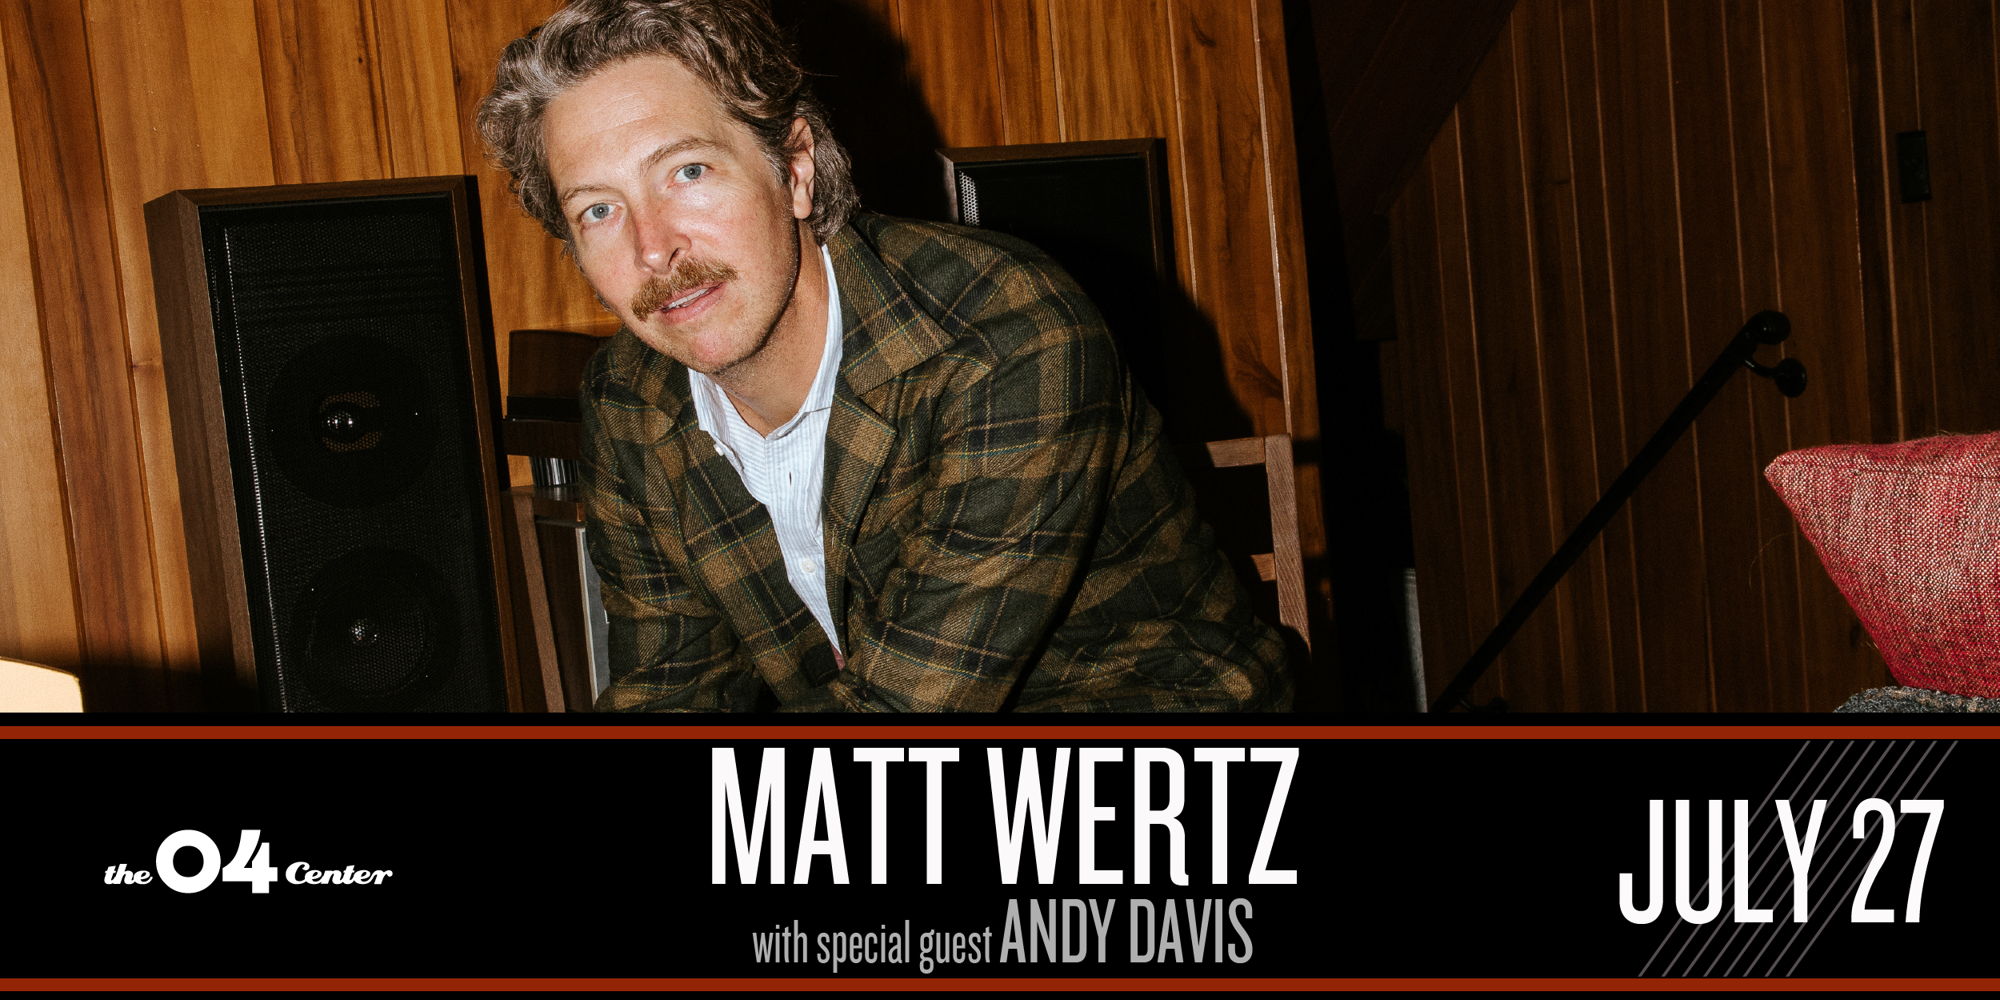 Matt Wertz with special guest Andy Davis promotional image